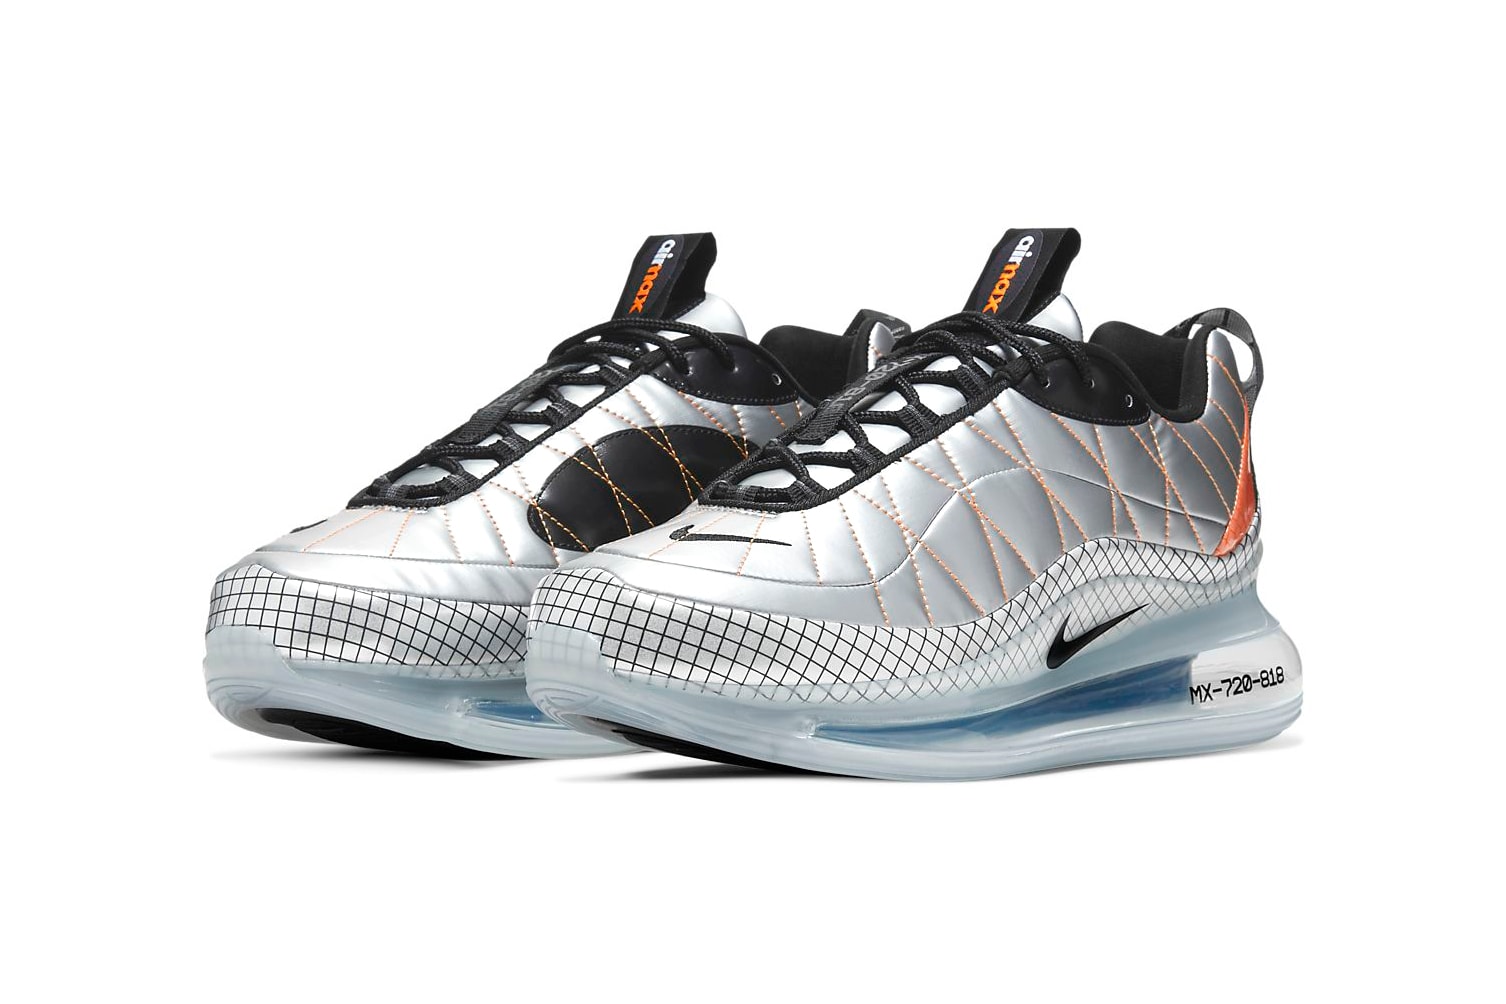 Nike's Releases Futuristic MX-720-818 in Metallic Silver and